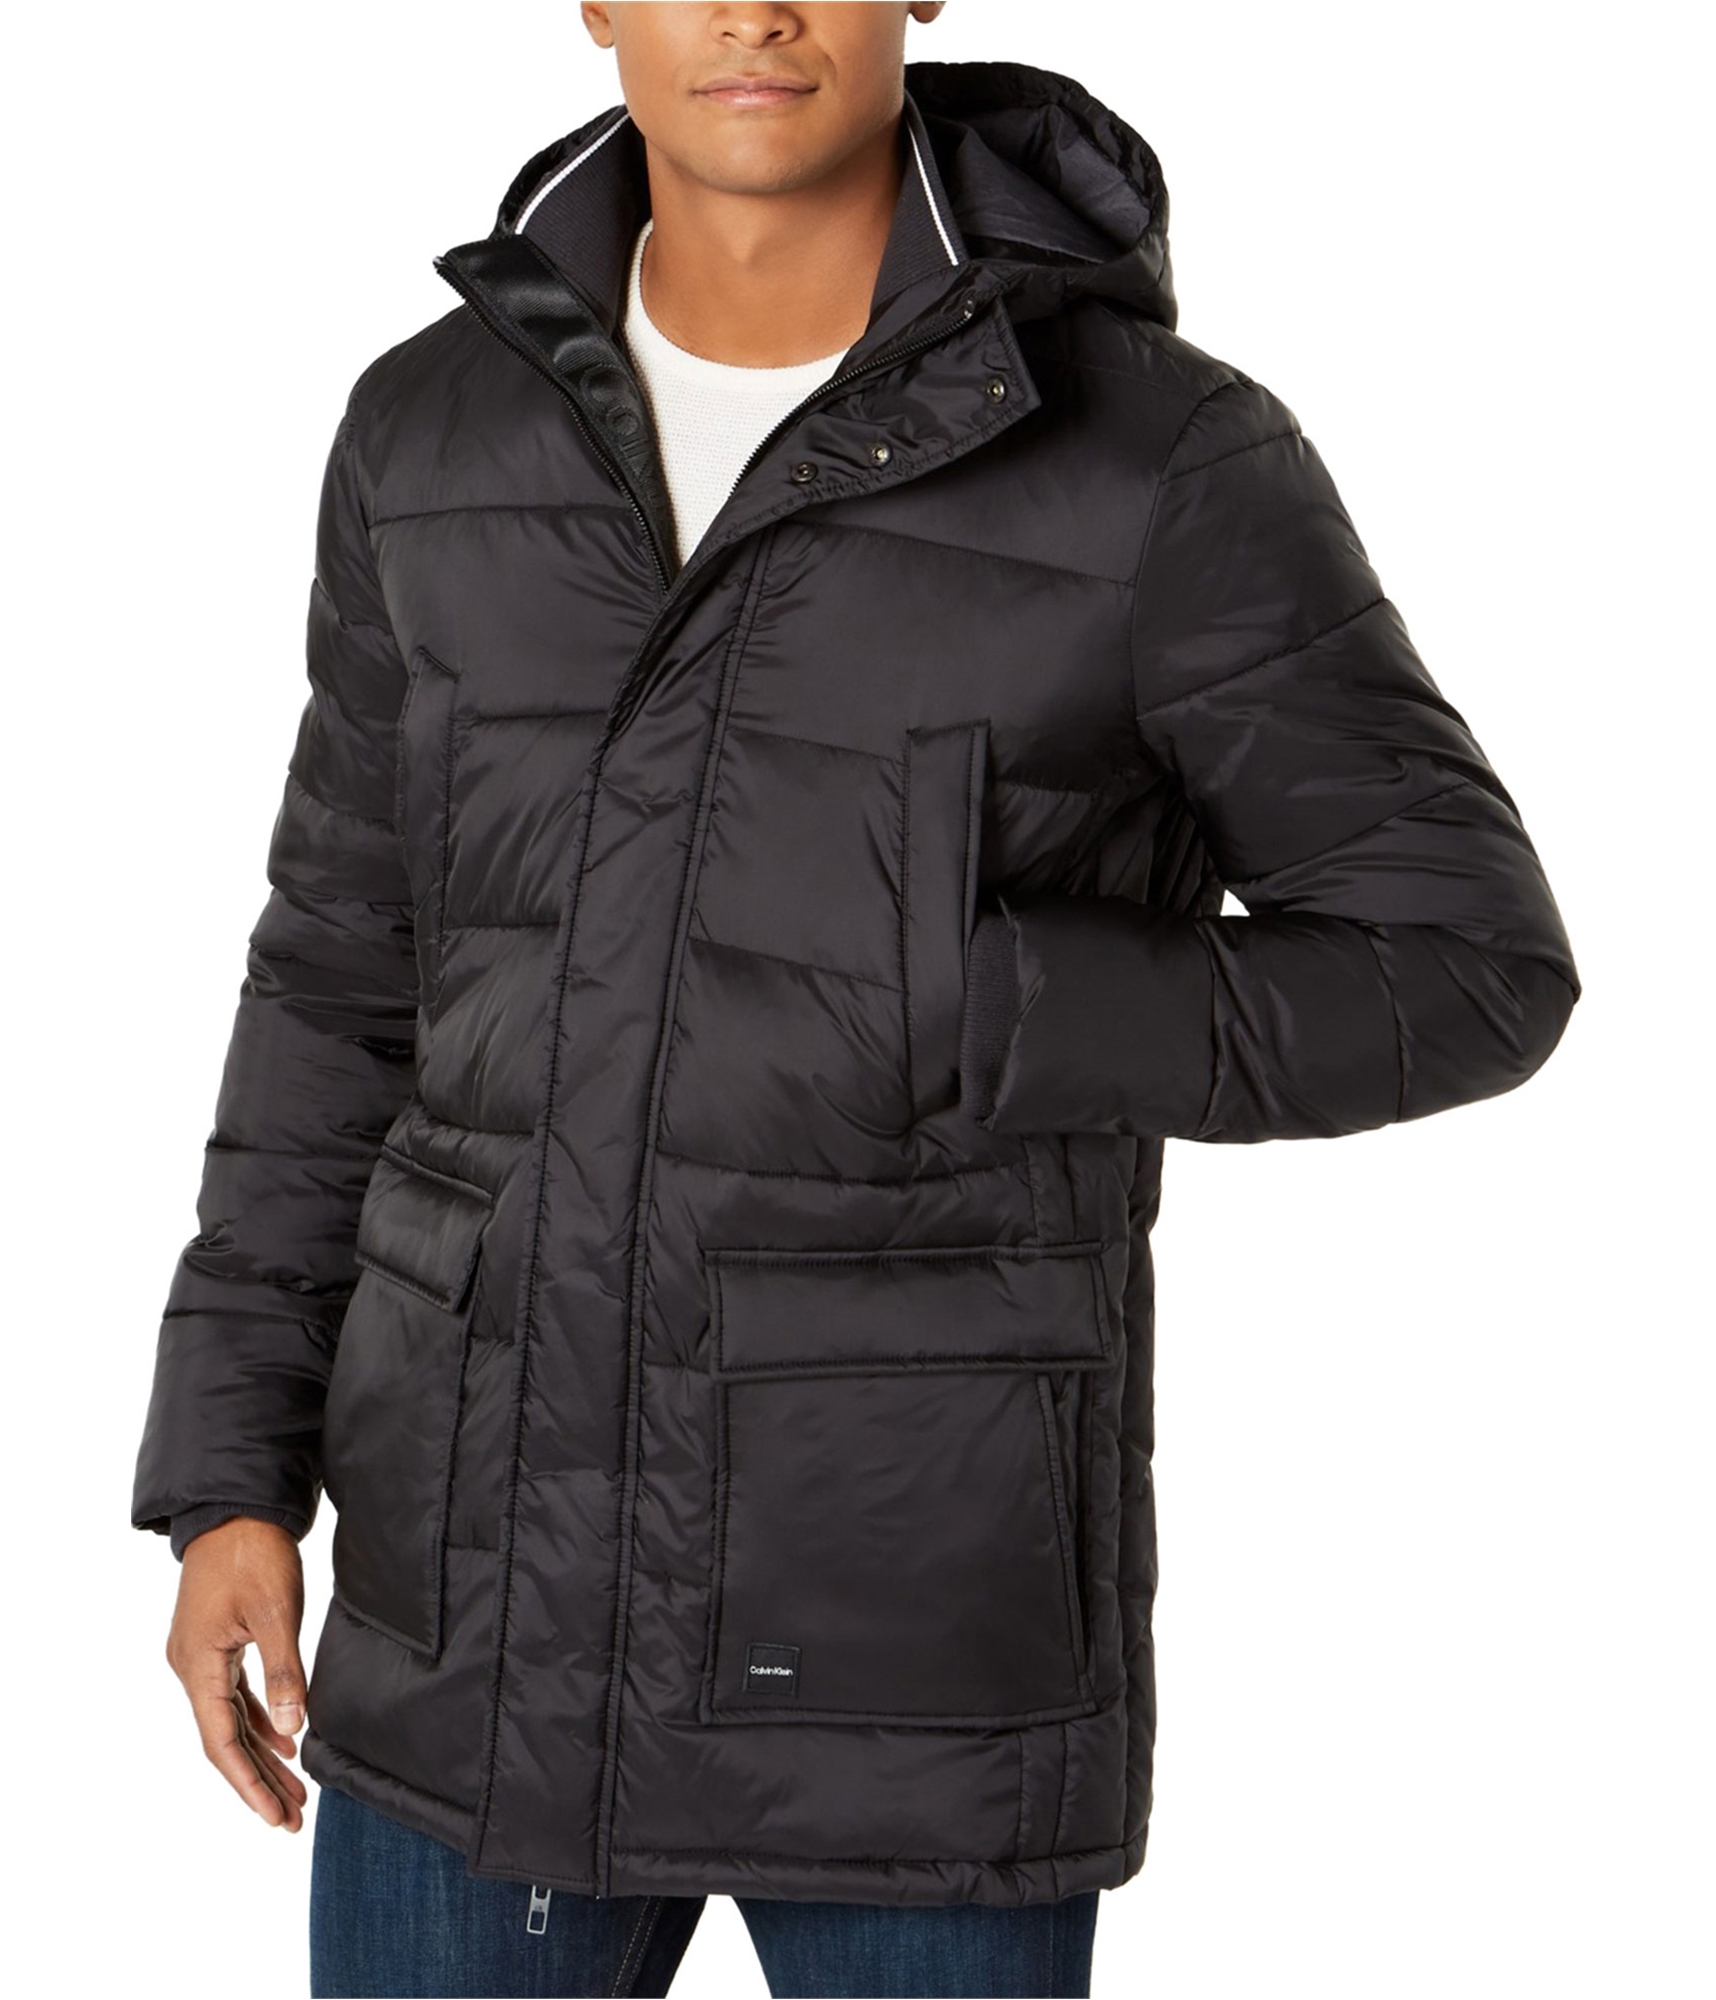 Voorkomen Soeverein synoniemenlijst Buy a Mens Calvin Klein Winter Hooded Puffer Jacket Online | TagsWeekly.com